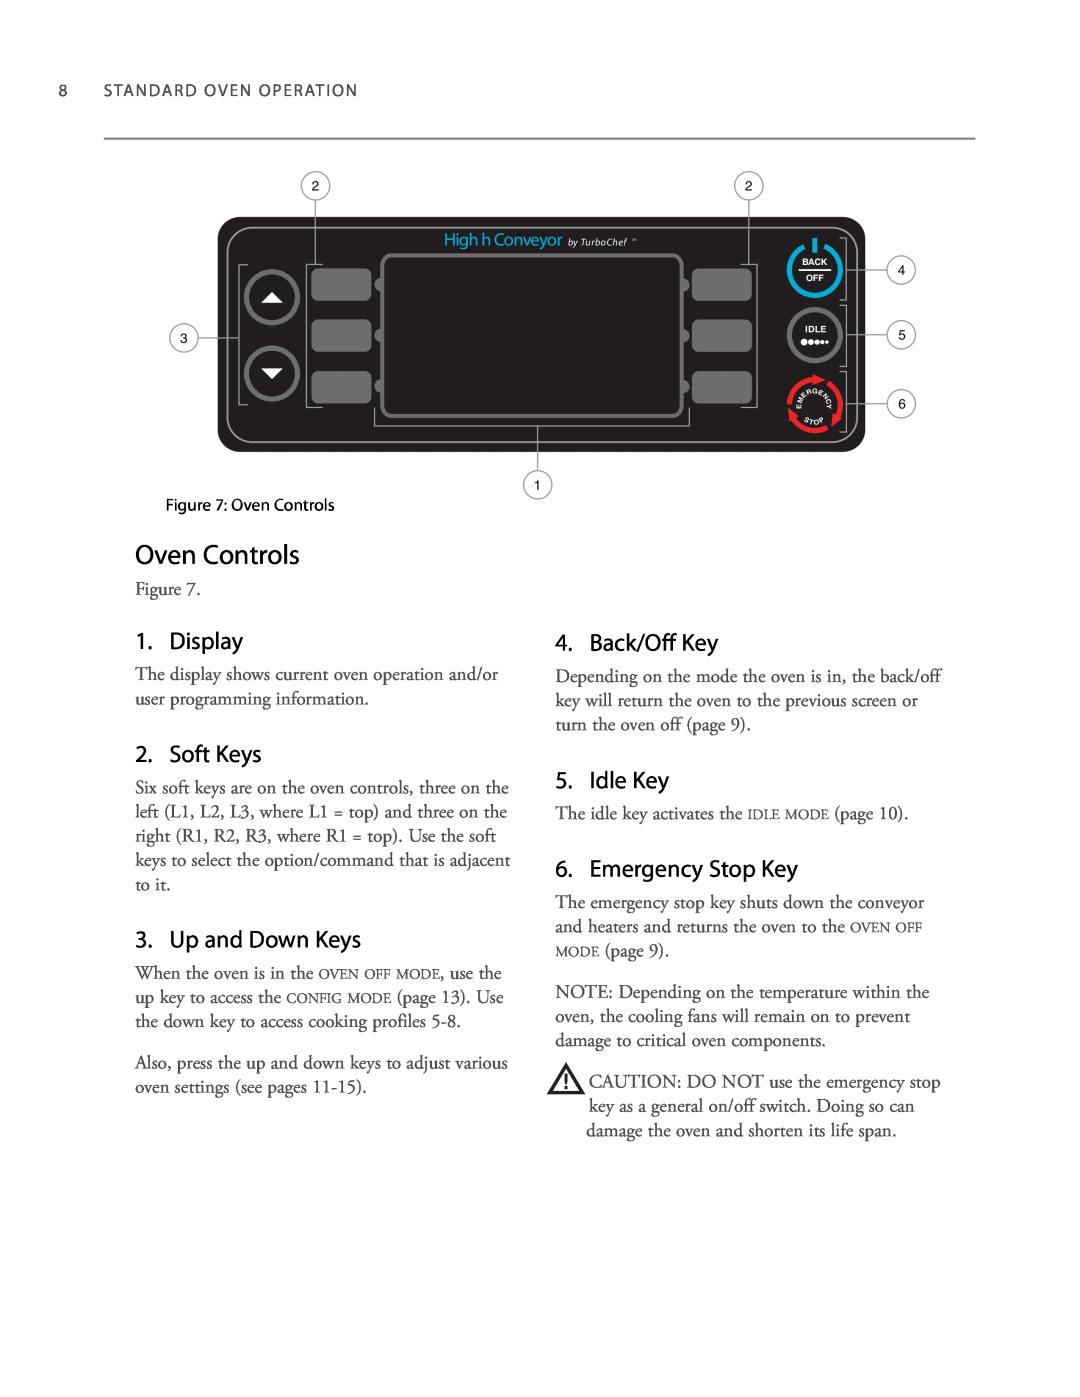 Turbo Chef Technologies 2020 HIGH h manual Oven Controls, Display, Back/Off Key, Soft Keys, Up and Down Keys, Idle Key 